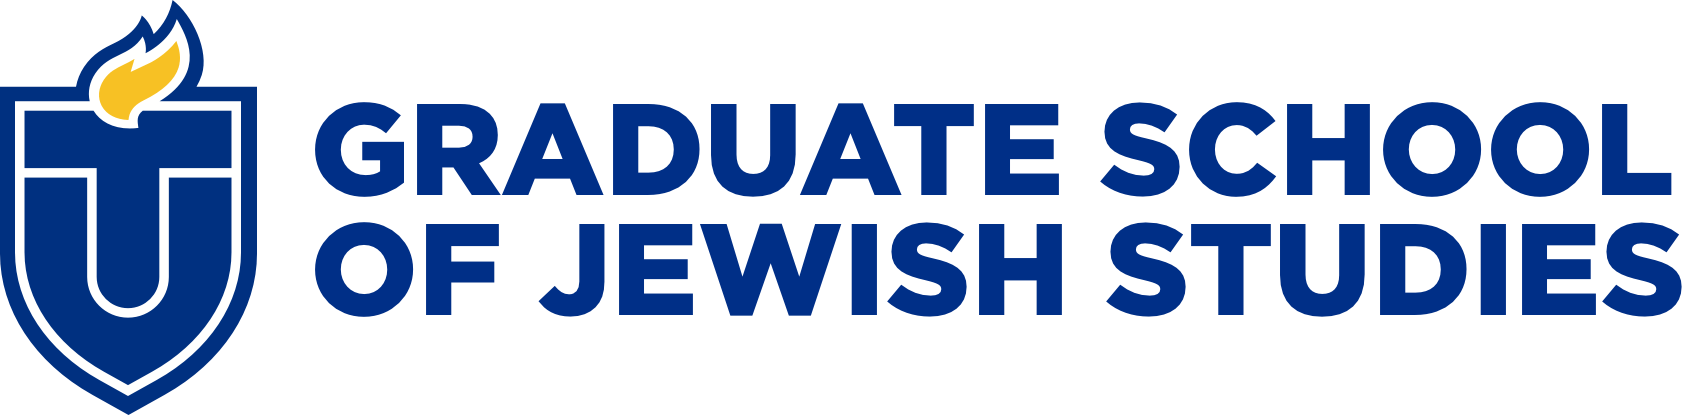 Graduate School of Jewish Studies